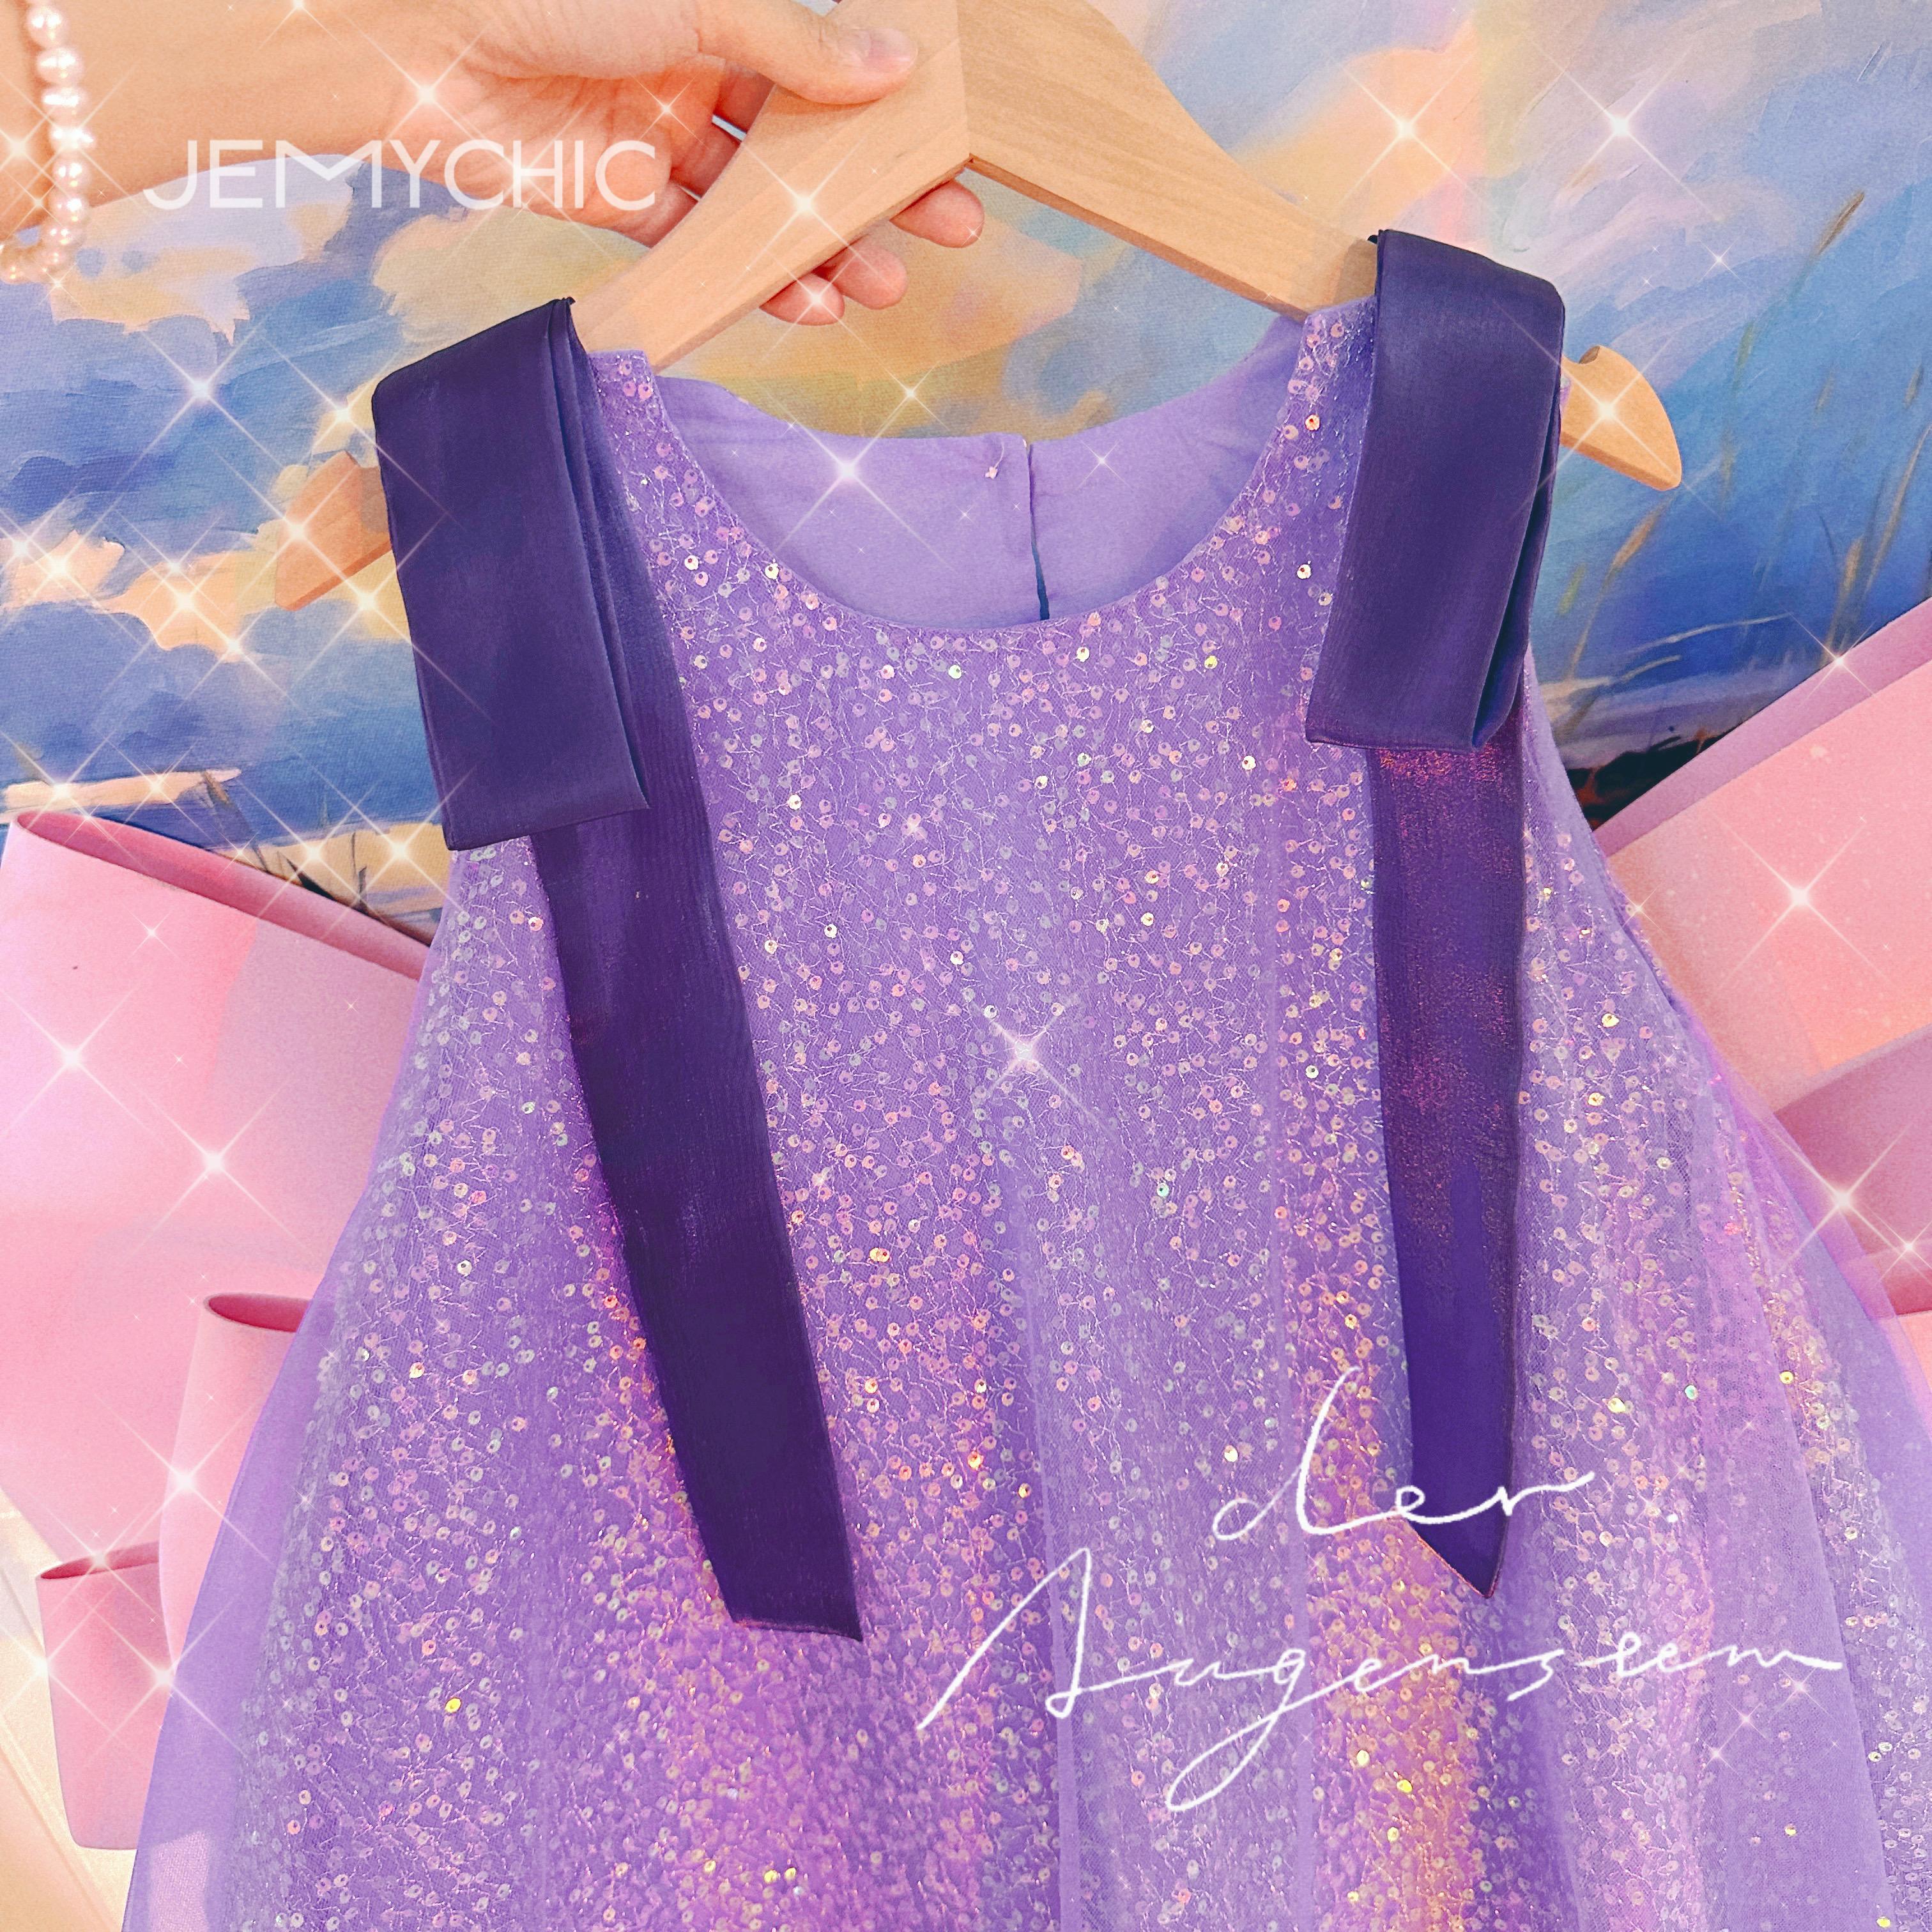 110-150  Ready Stock Girls Princess Dress 110-150 Sleeveless Performance Dress One Piece Eneving Dress Purple Catpapa JEMY03